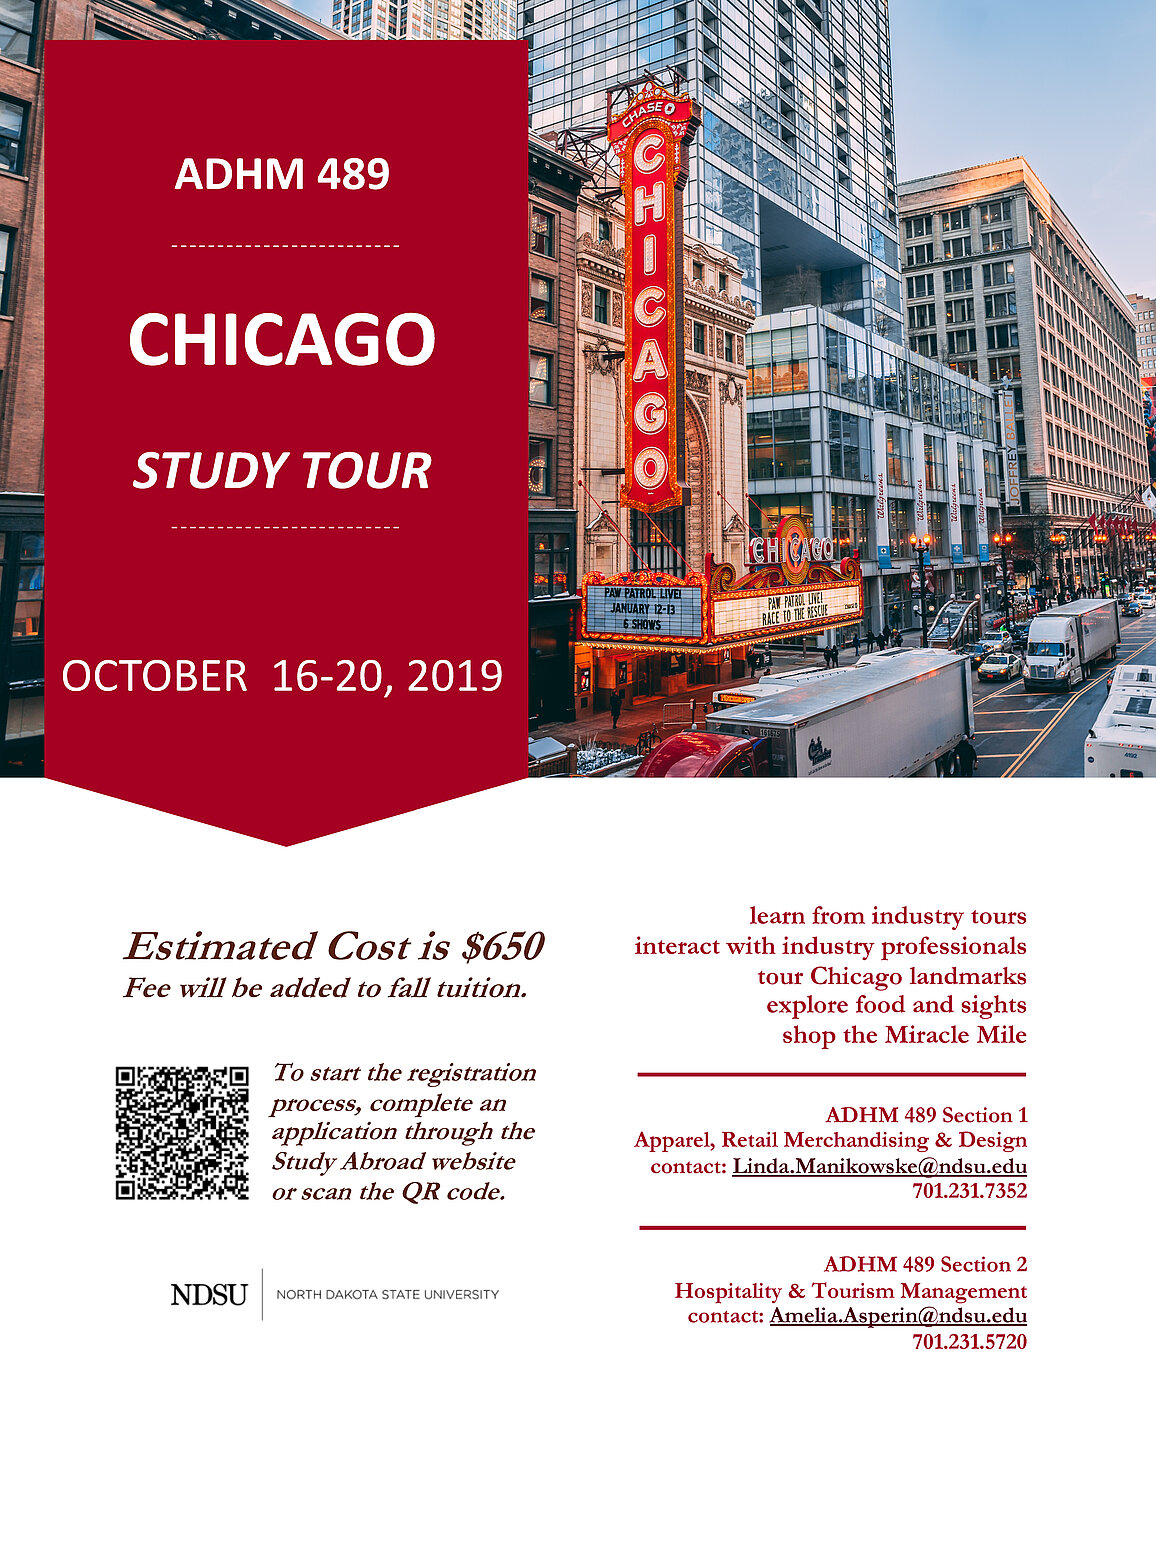 Chicago Study Tour Information